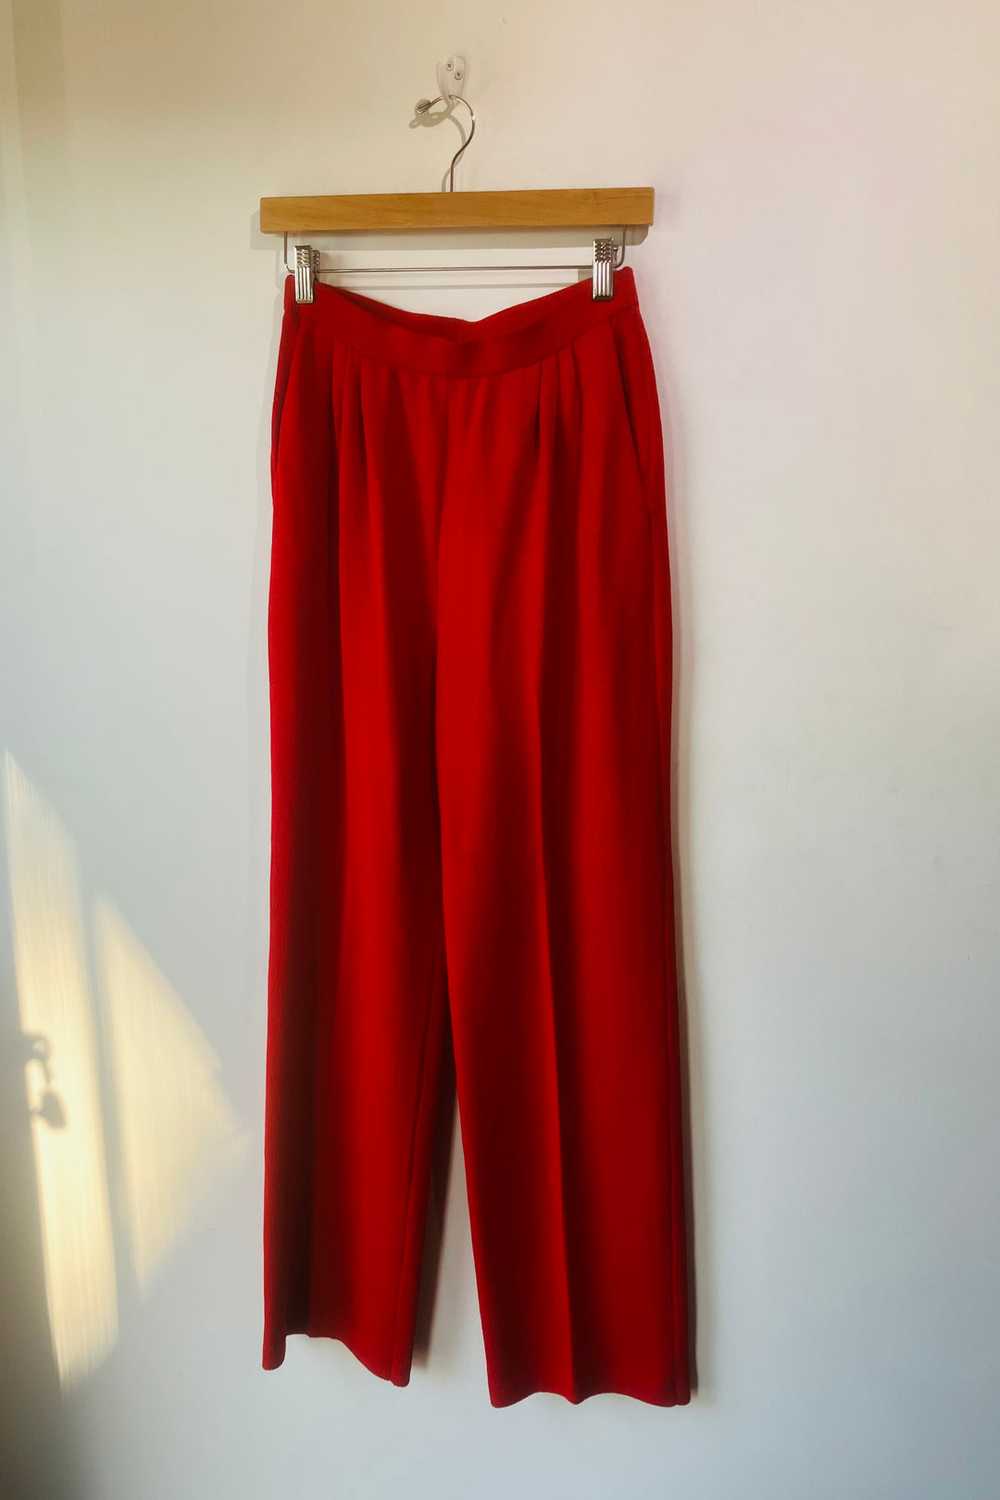 Vintage St. John Red Knit Pants - image 1